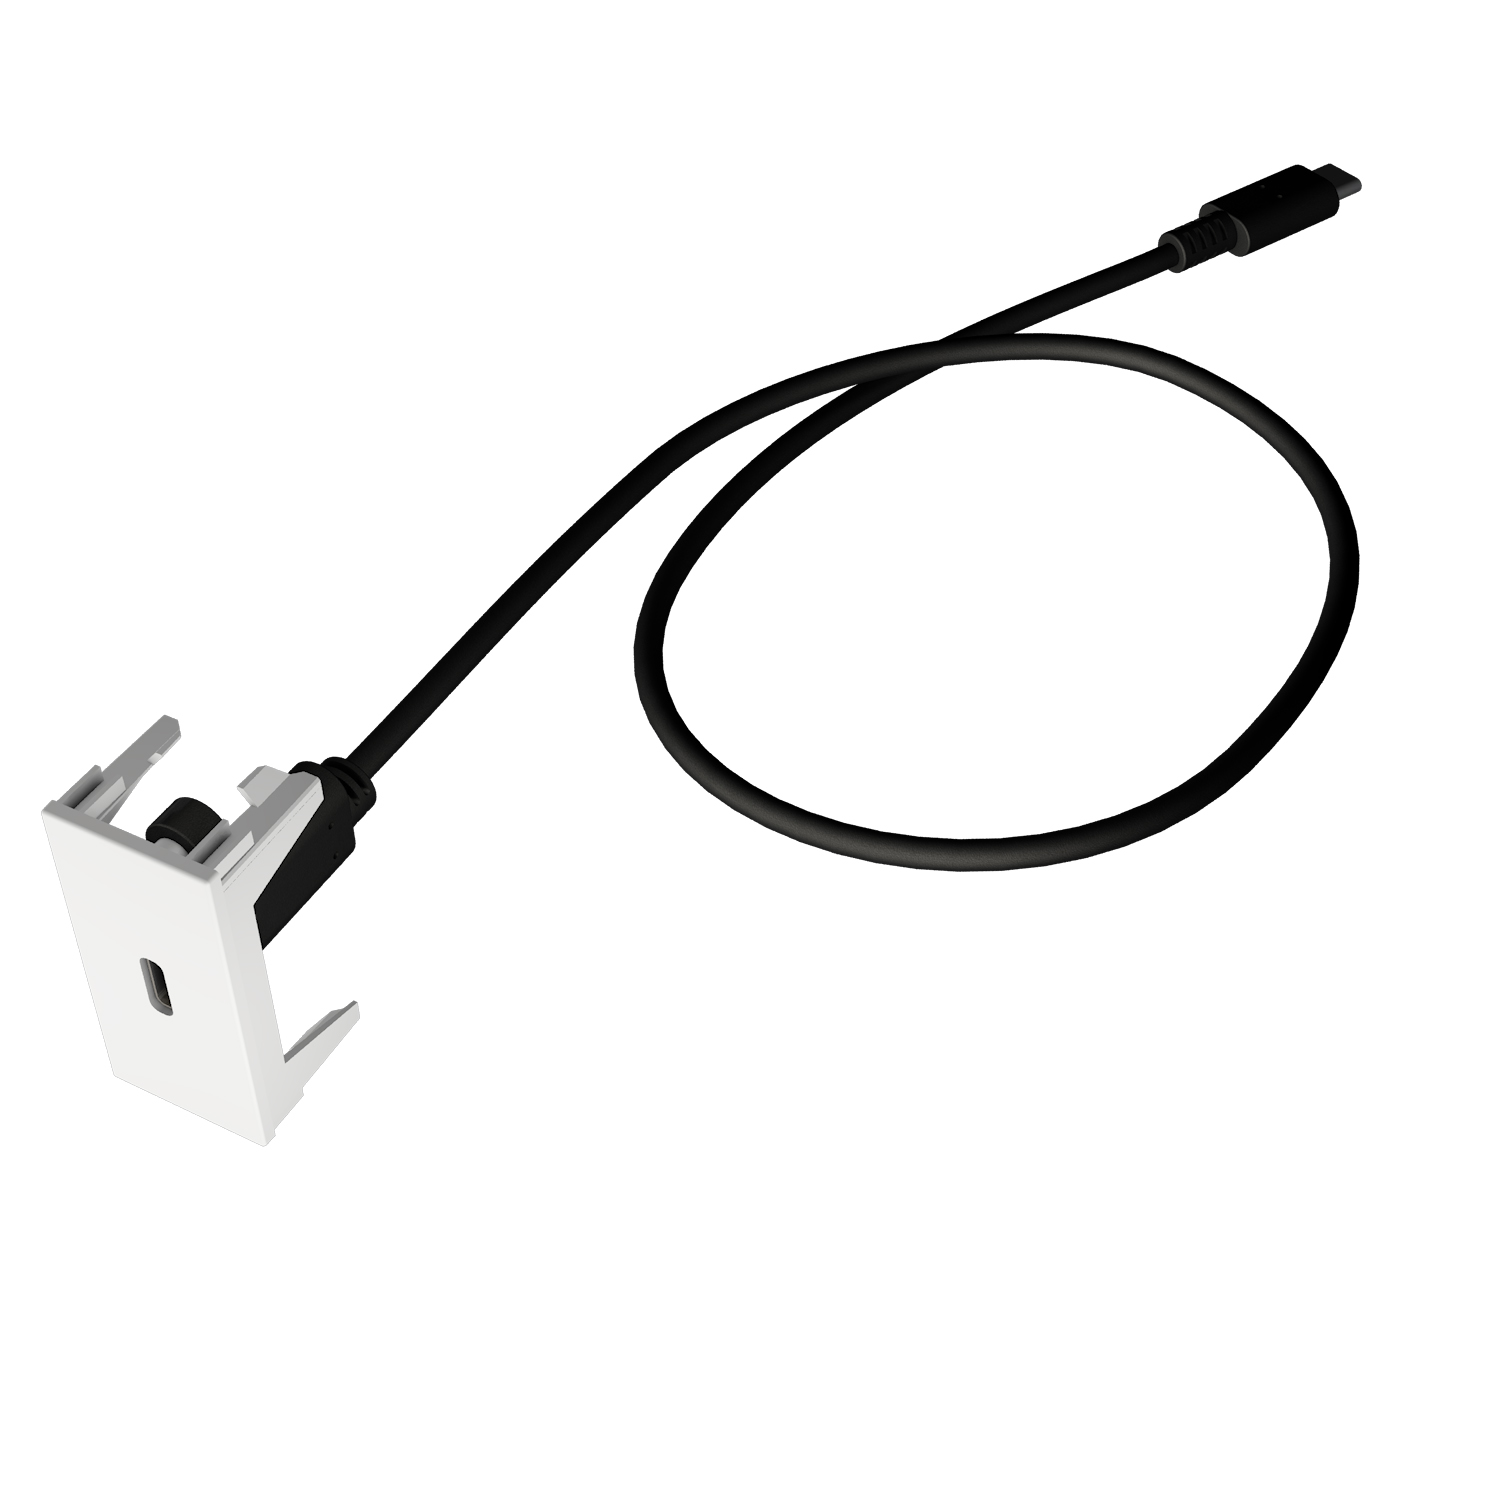 Kindermann Konnect flex 45 click USB C 1m ppm-stuttgart